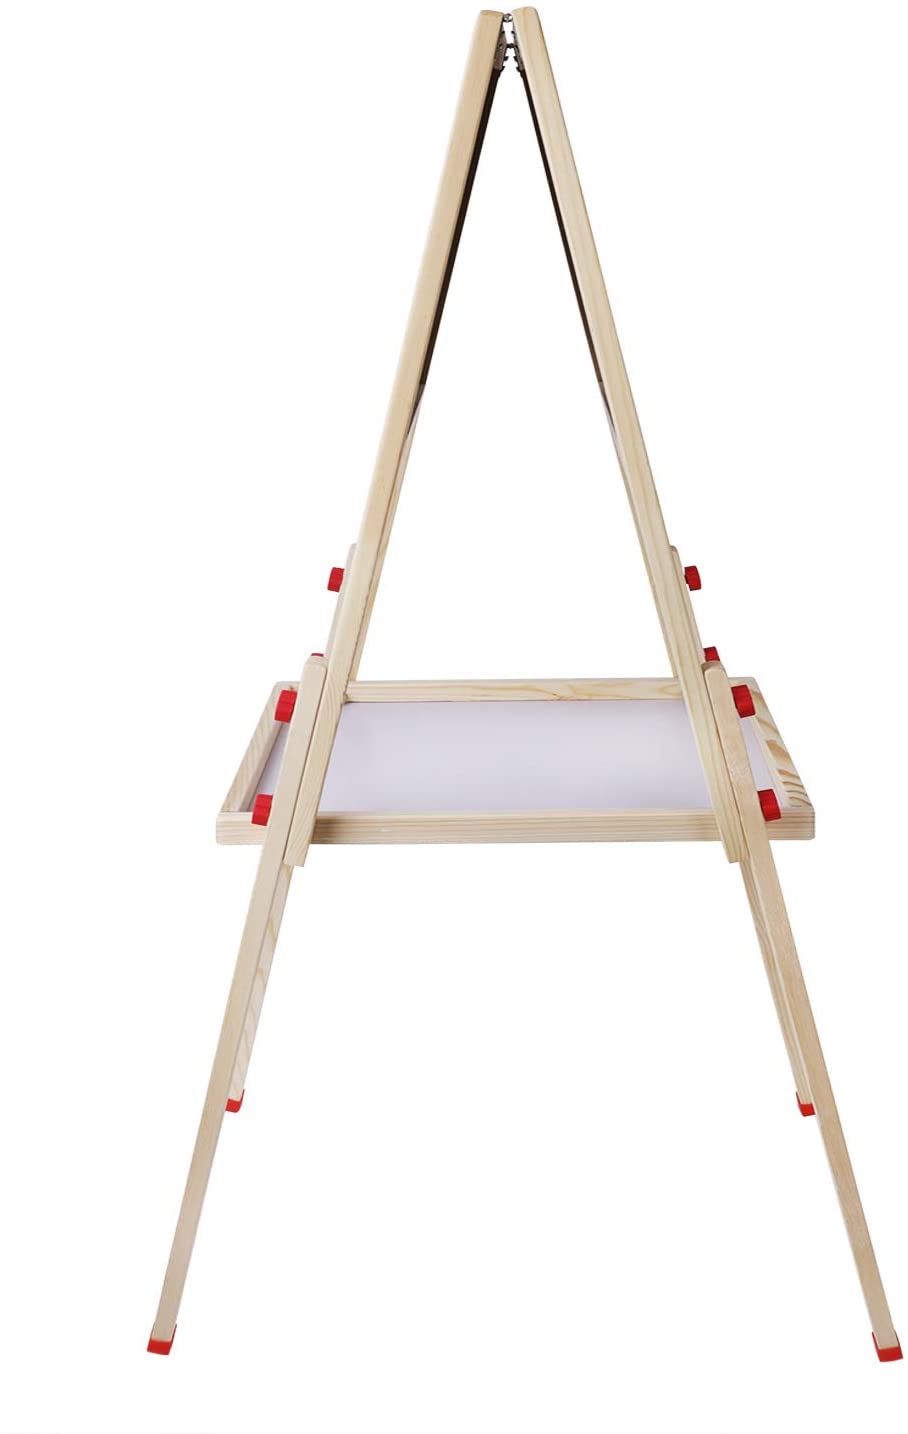 Caballete de mesa de madera de doble cara de 80 piezas para niños